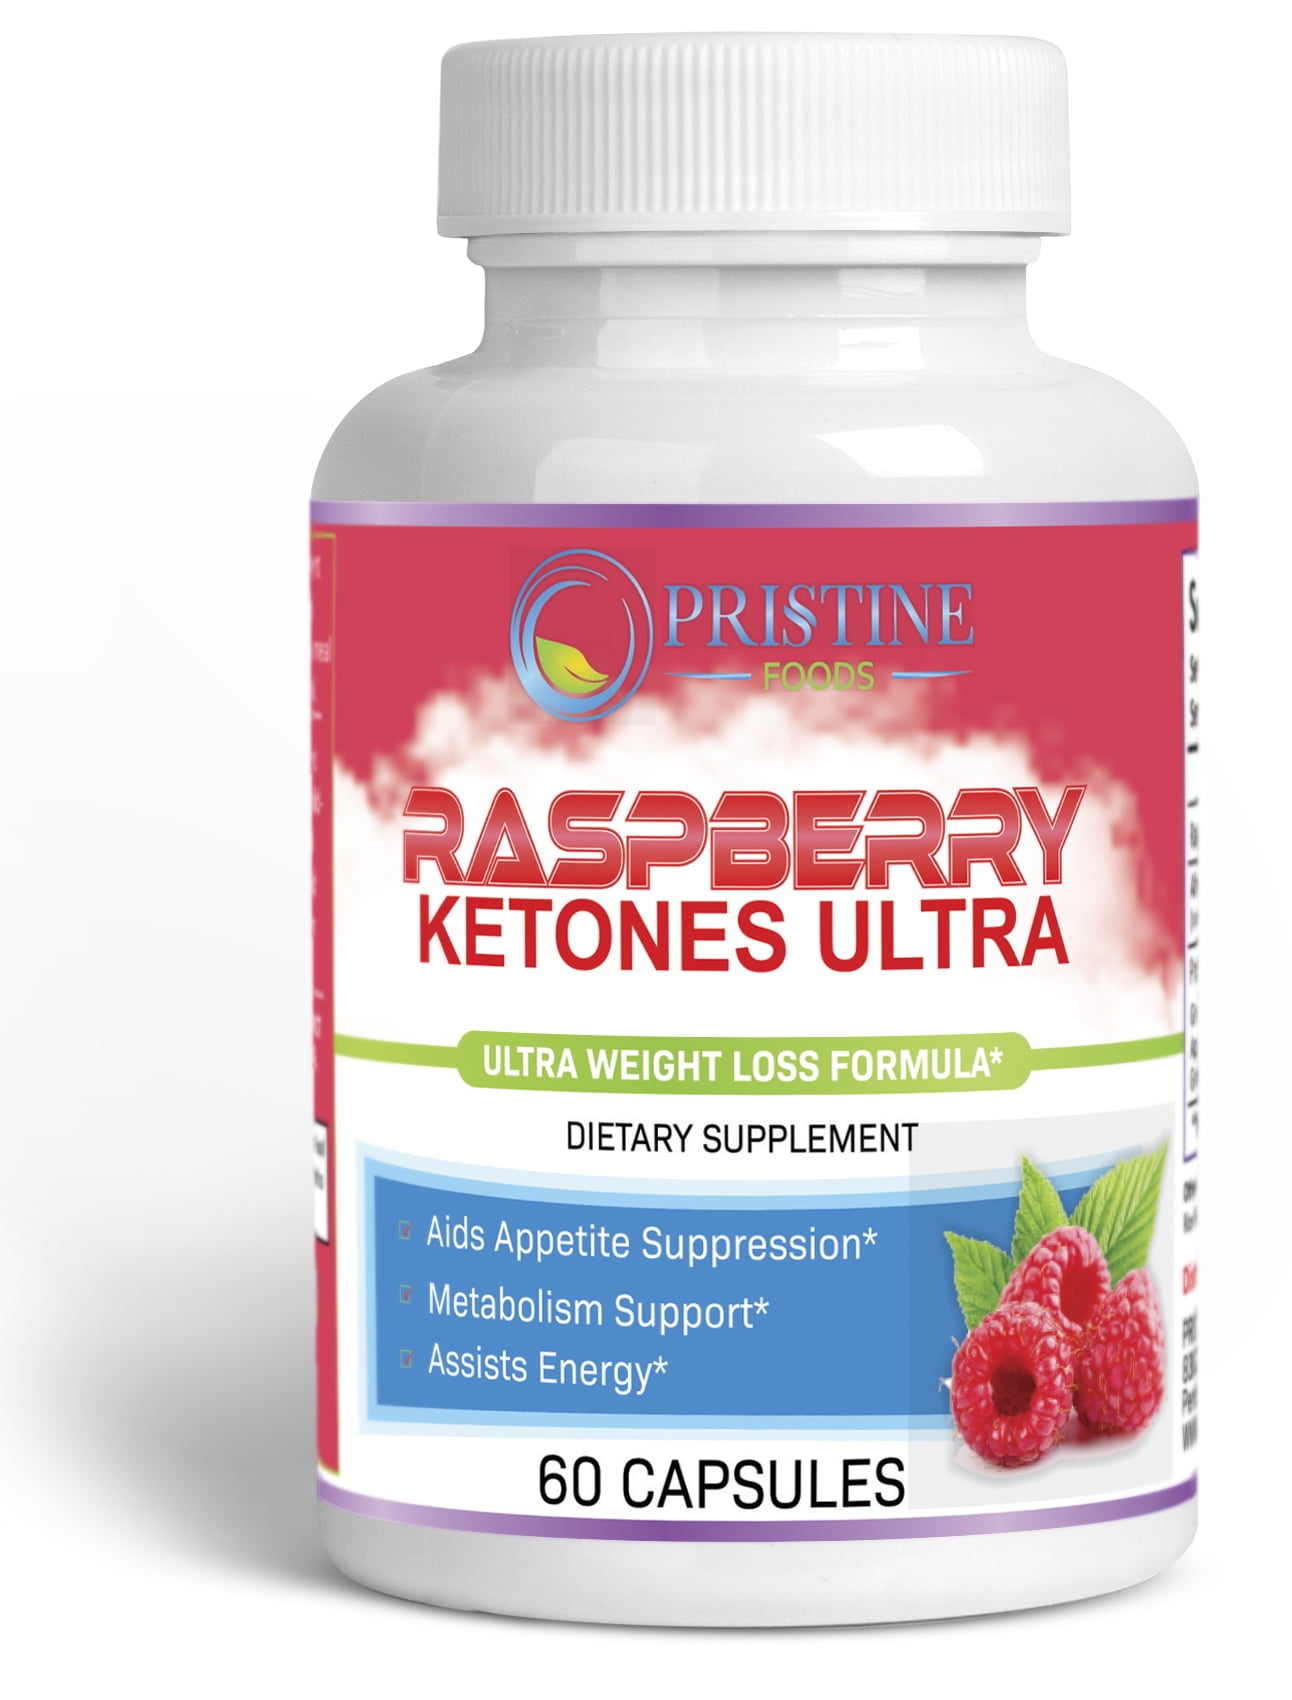 Raspberry ketones for appetite suppression